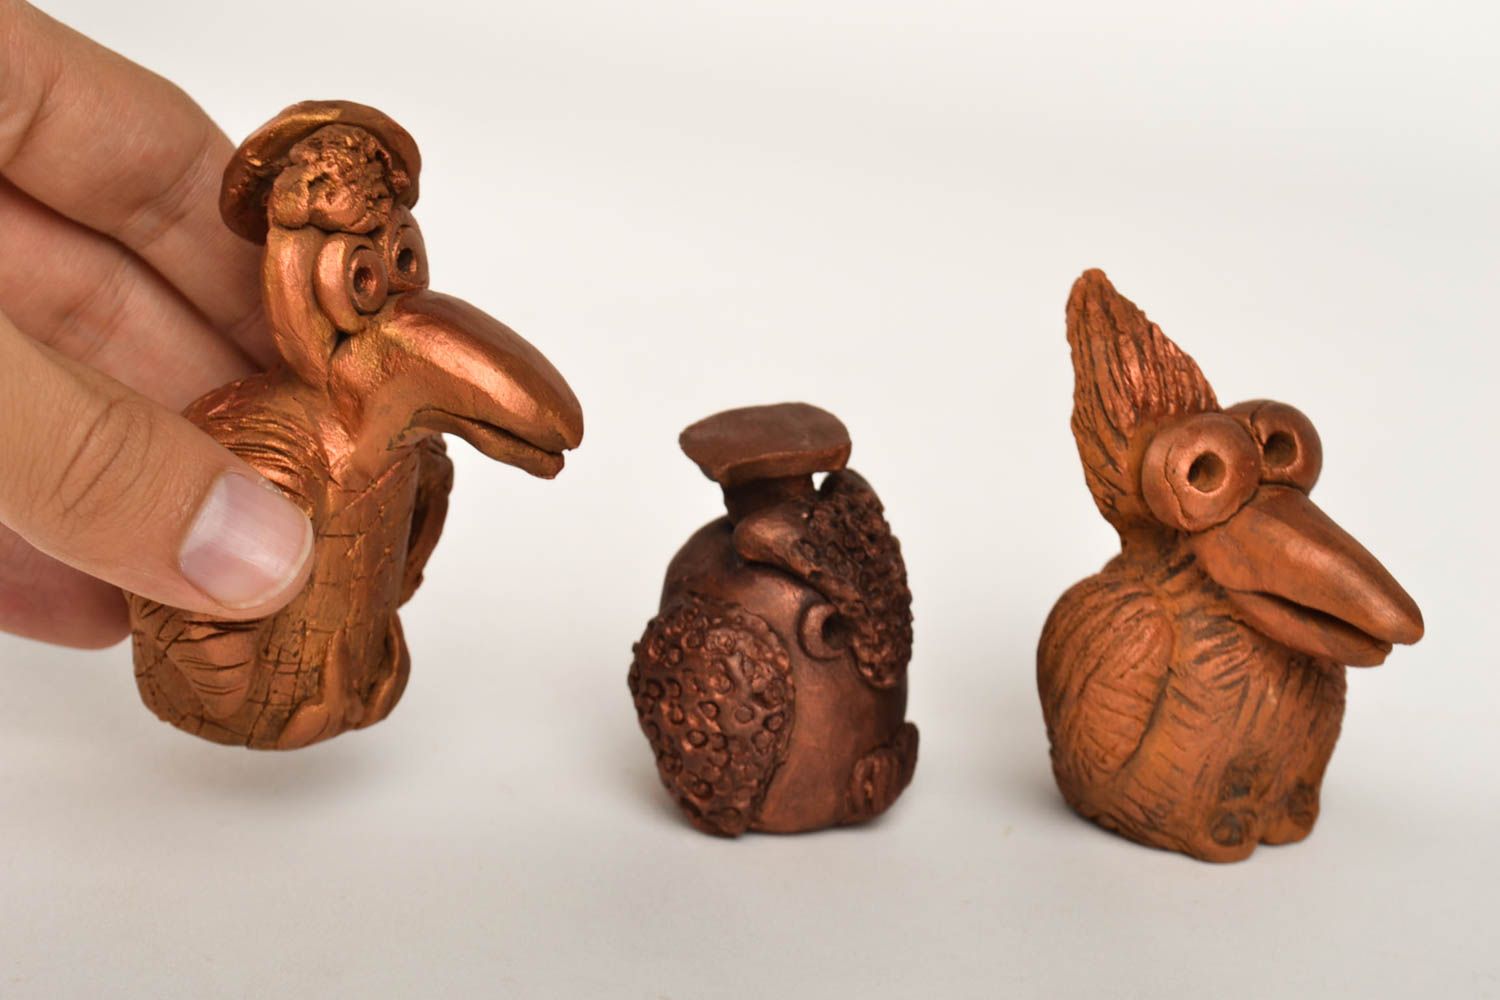 Handmade figurine set of 3 items clay figurine gift ideas decorative use only photo 5